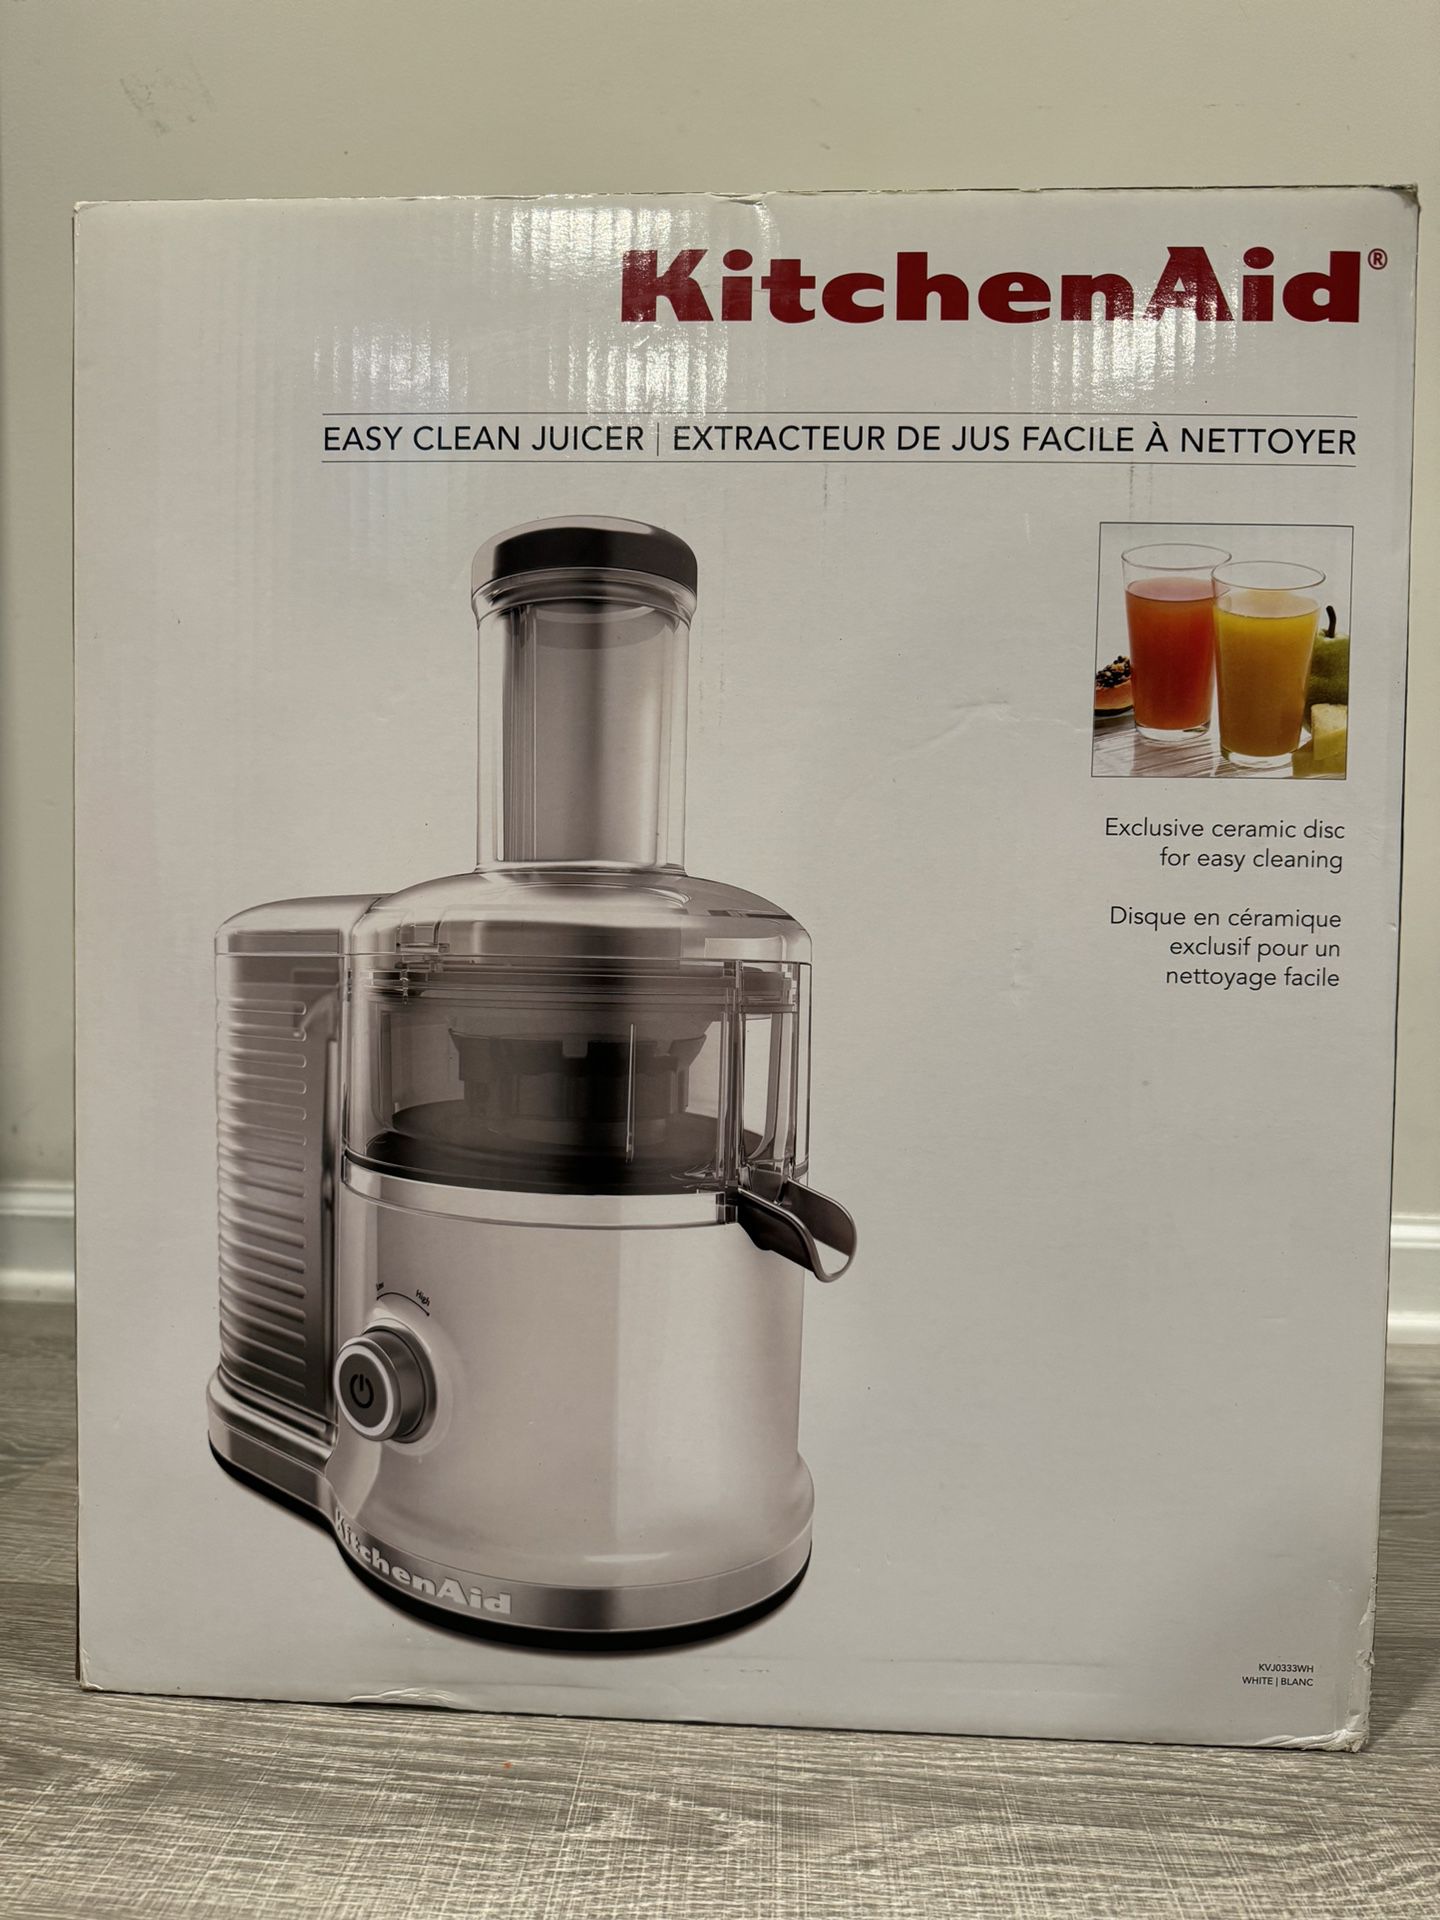 Kitchenaid - Easy clean Juicer 